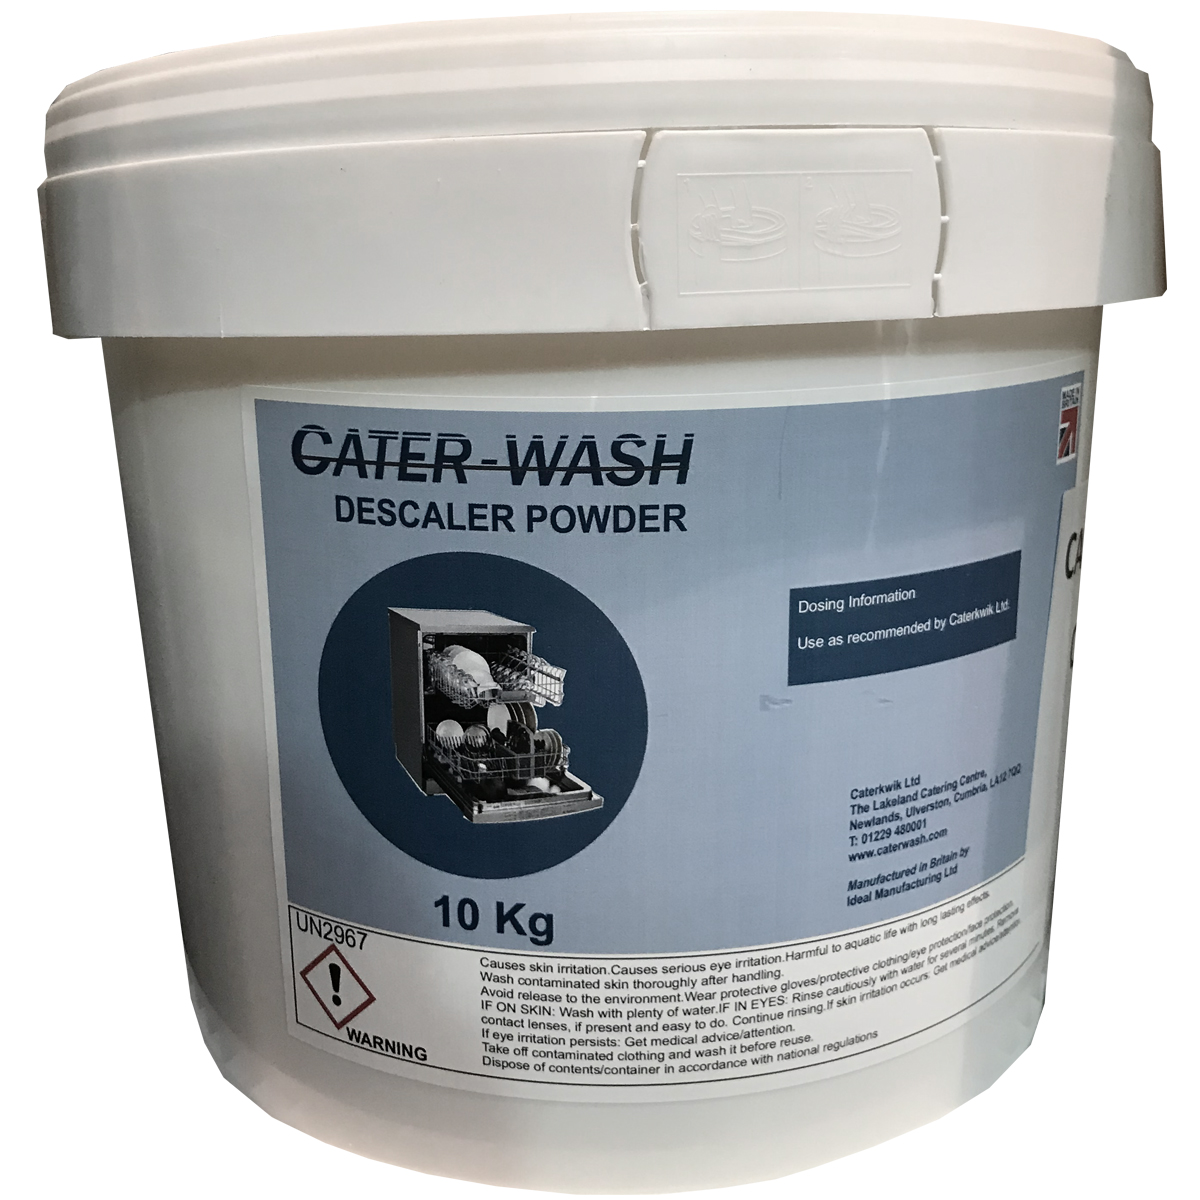 Cater-Wash Commercial Descaling Powder - 10kg - CK8564